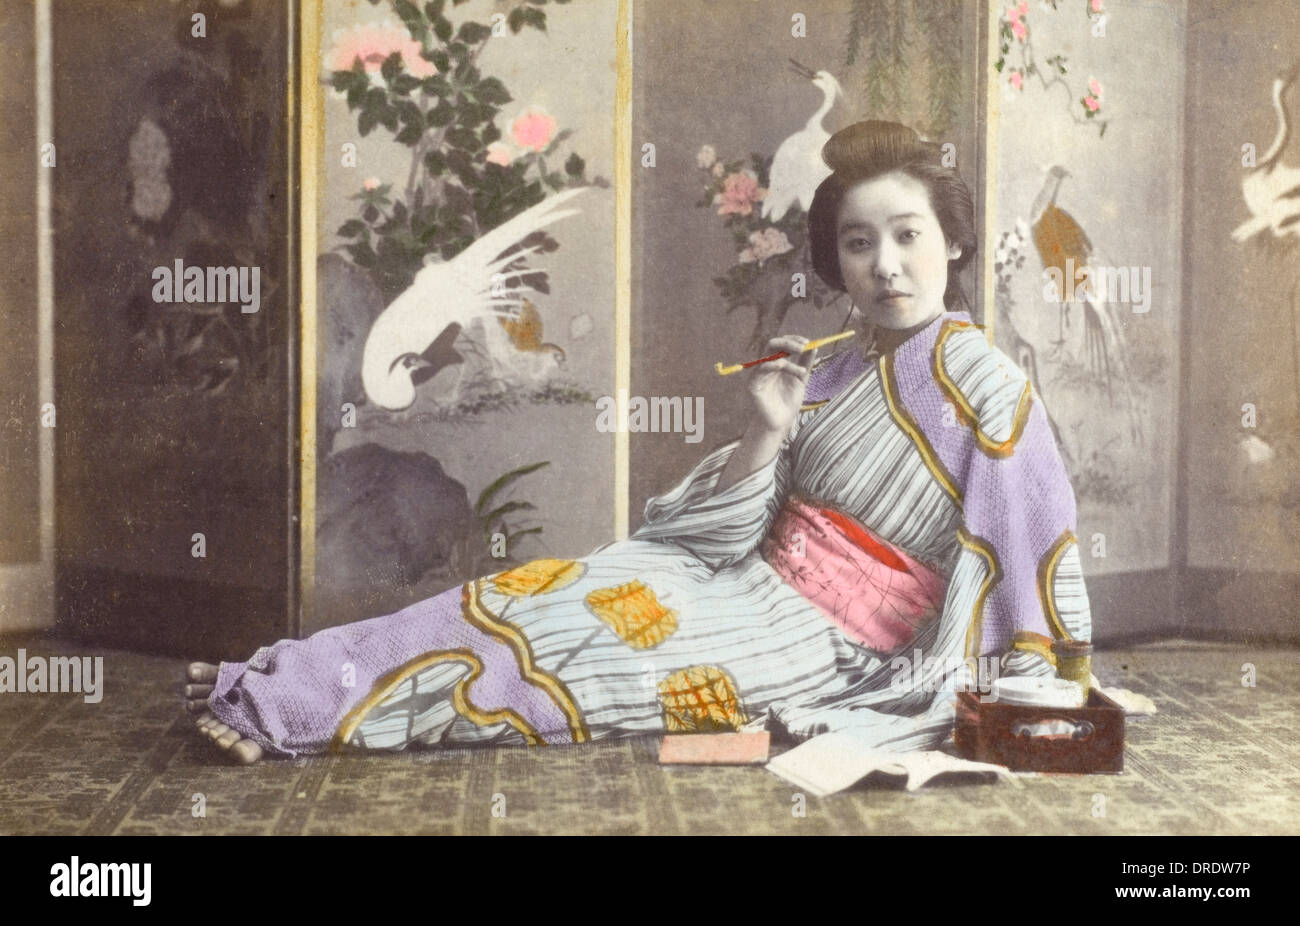 Pipes japonaises traditionnelles - Page 4 Japon-geisha-girl-fumeurs-inclinables-drdw7p